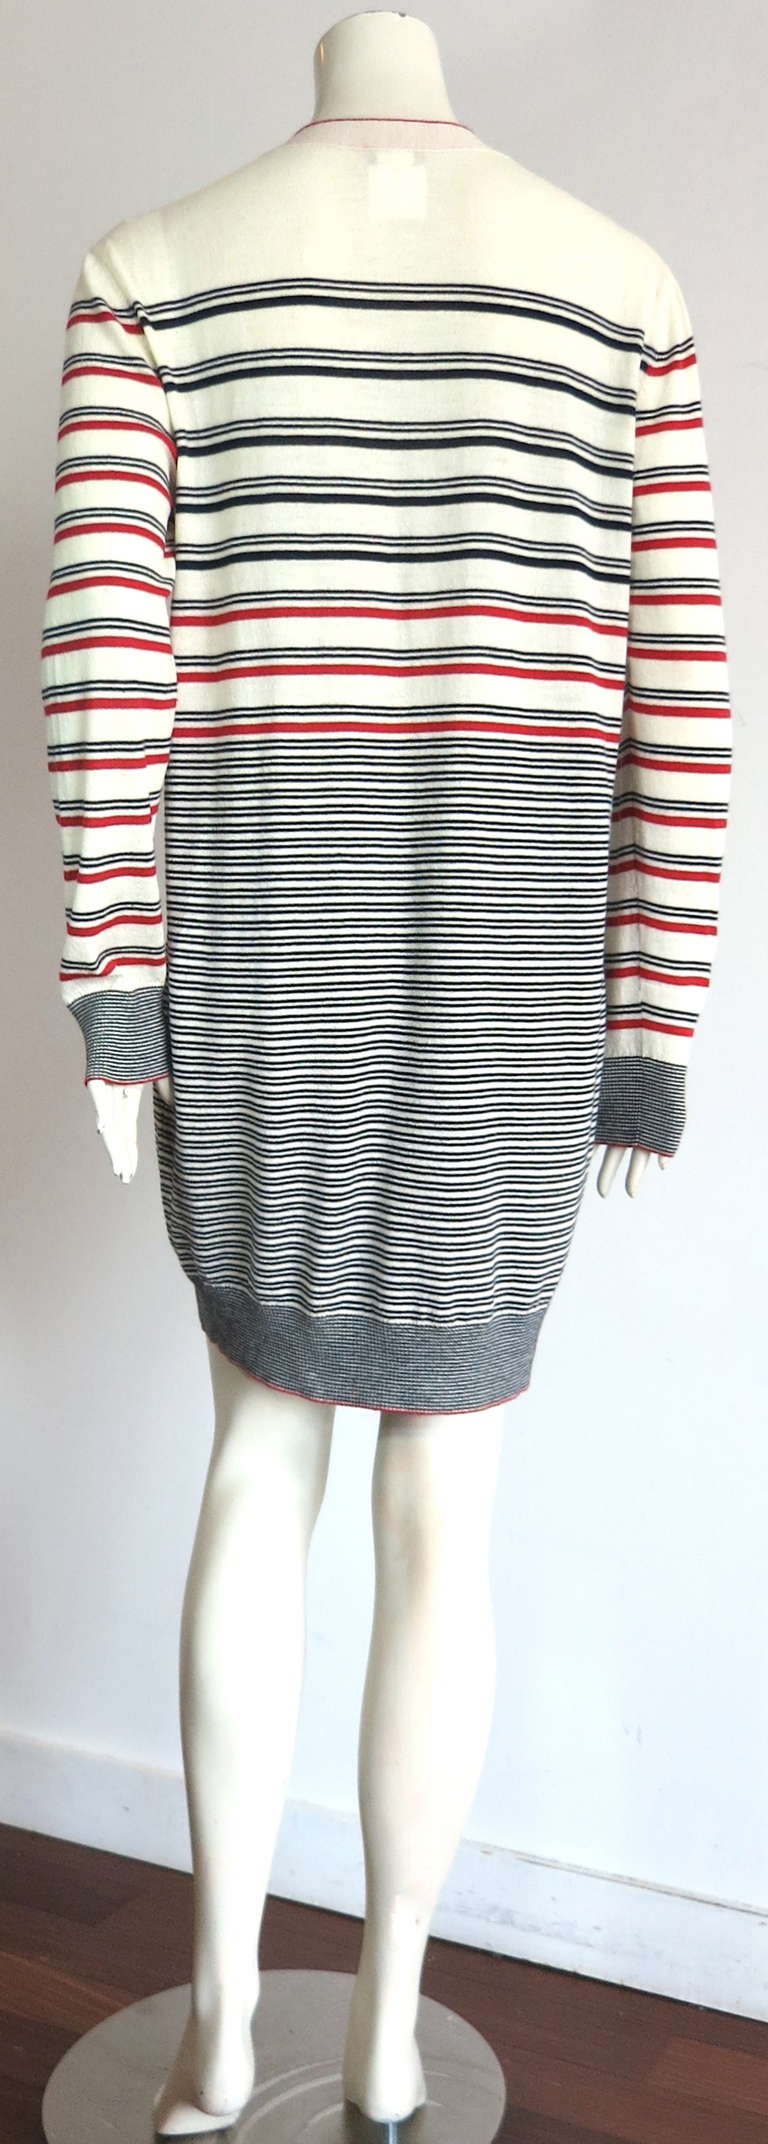 CHANEL PARIS striped cardigan knit sweater 1